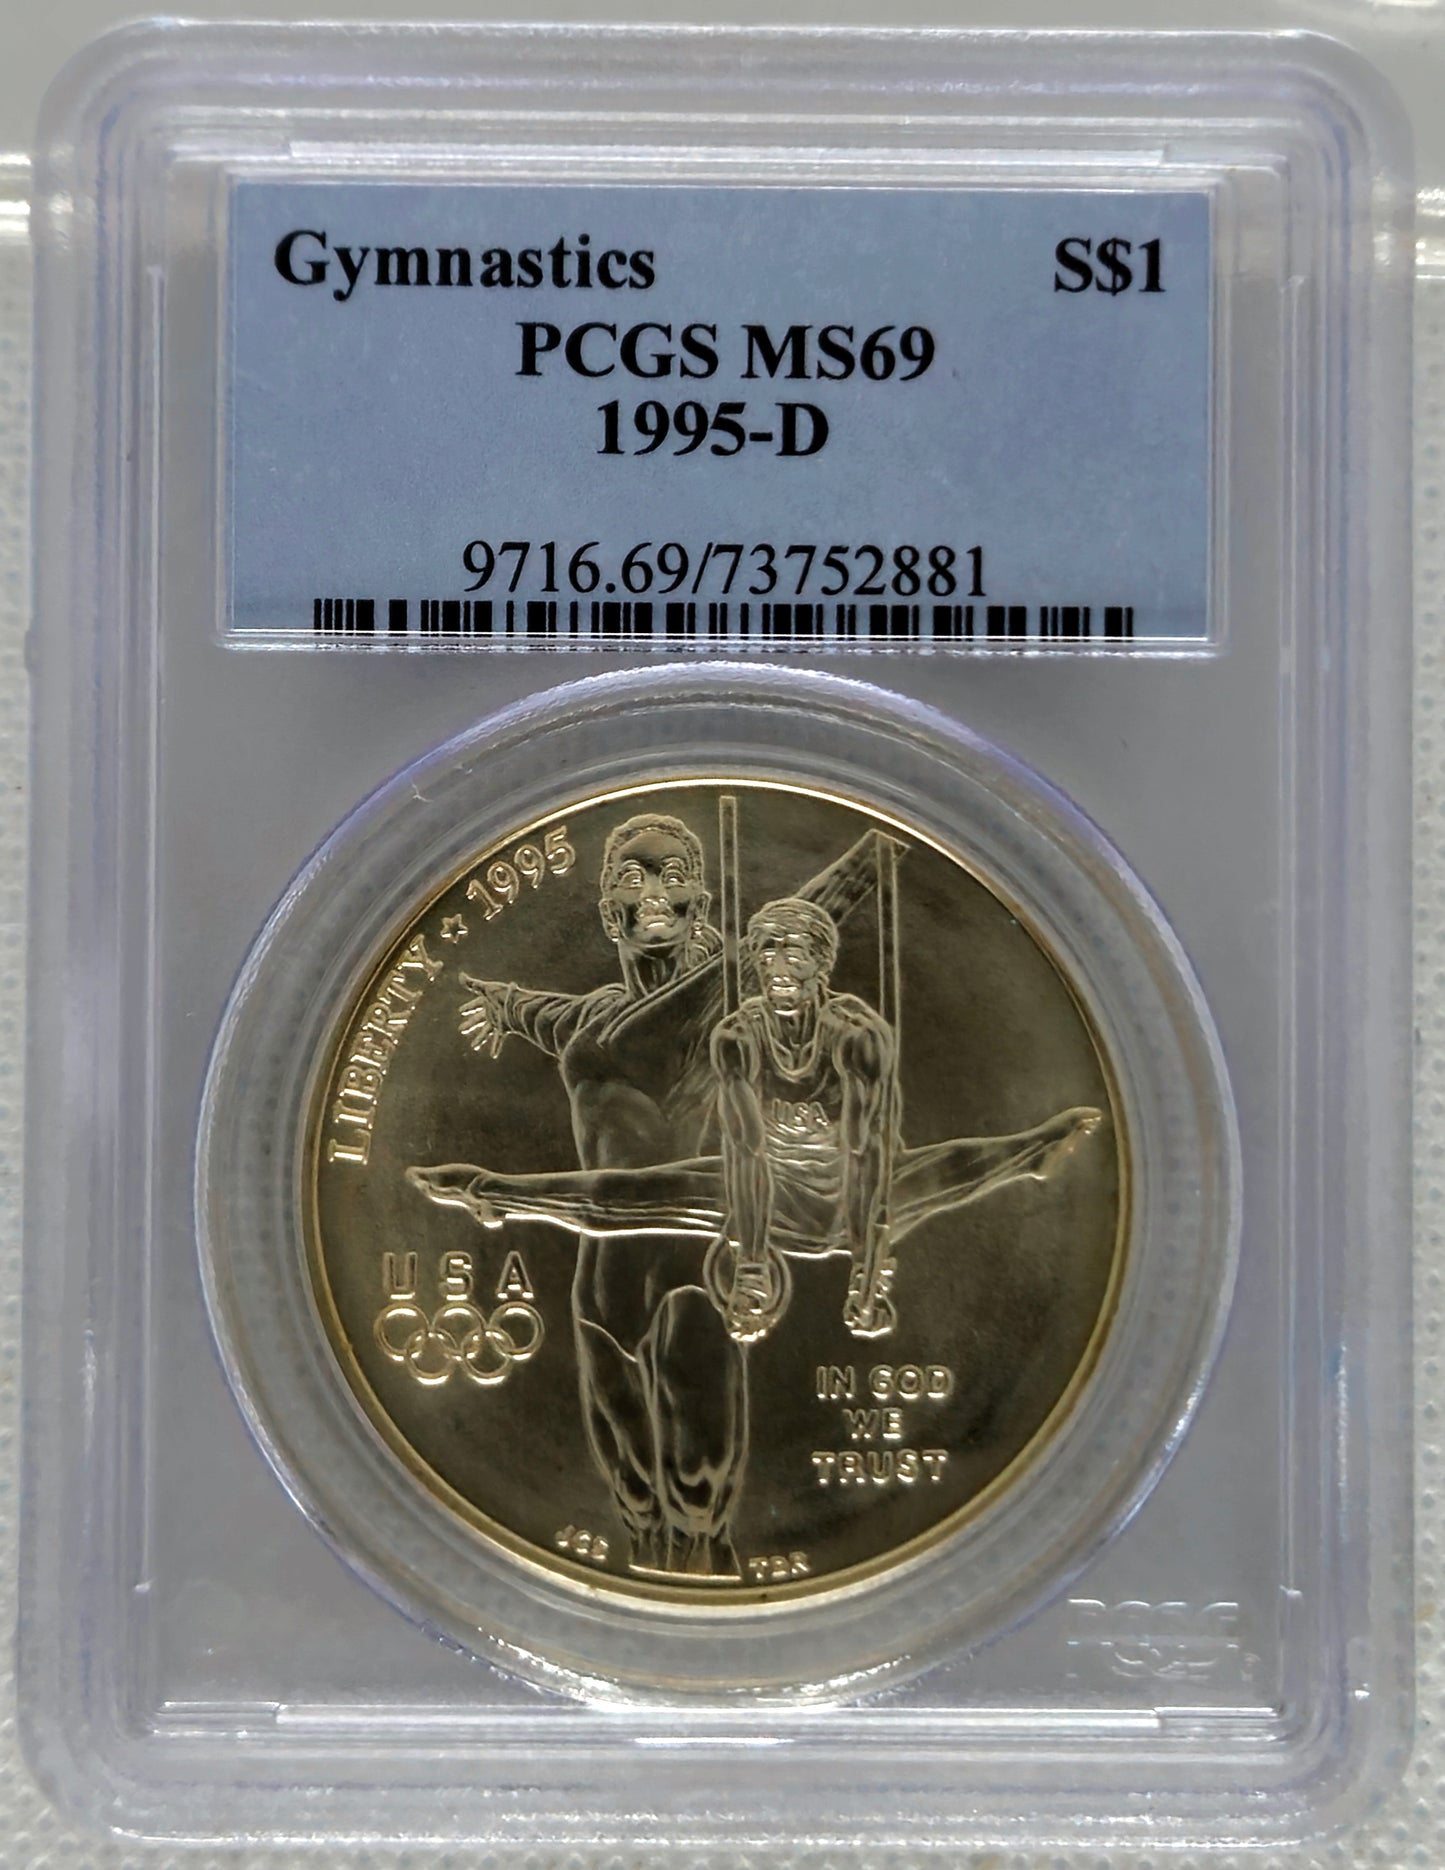 1995-D Gymnastics PCGS MS 69 Commemorative Silver Dollar